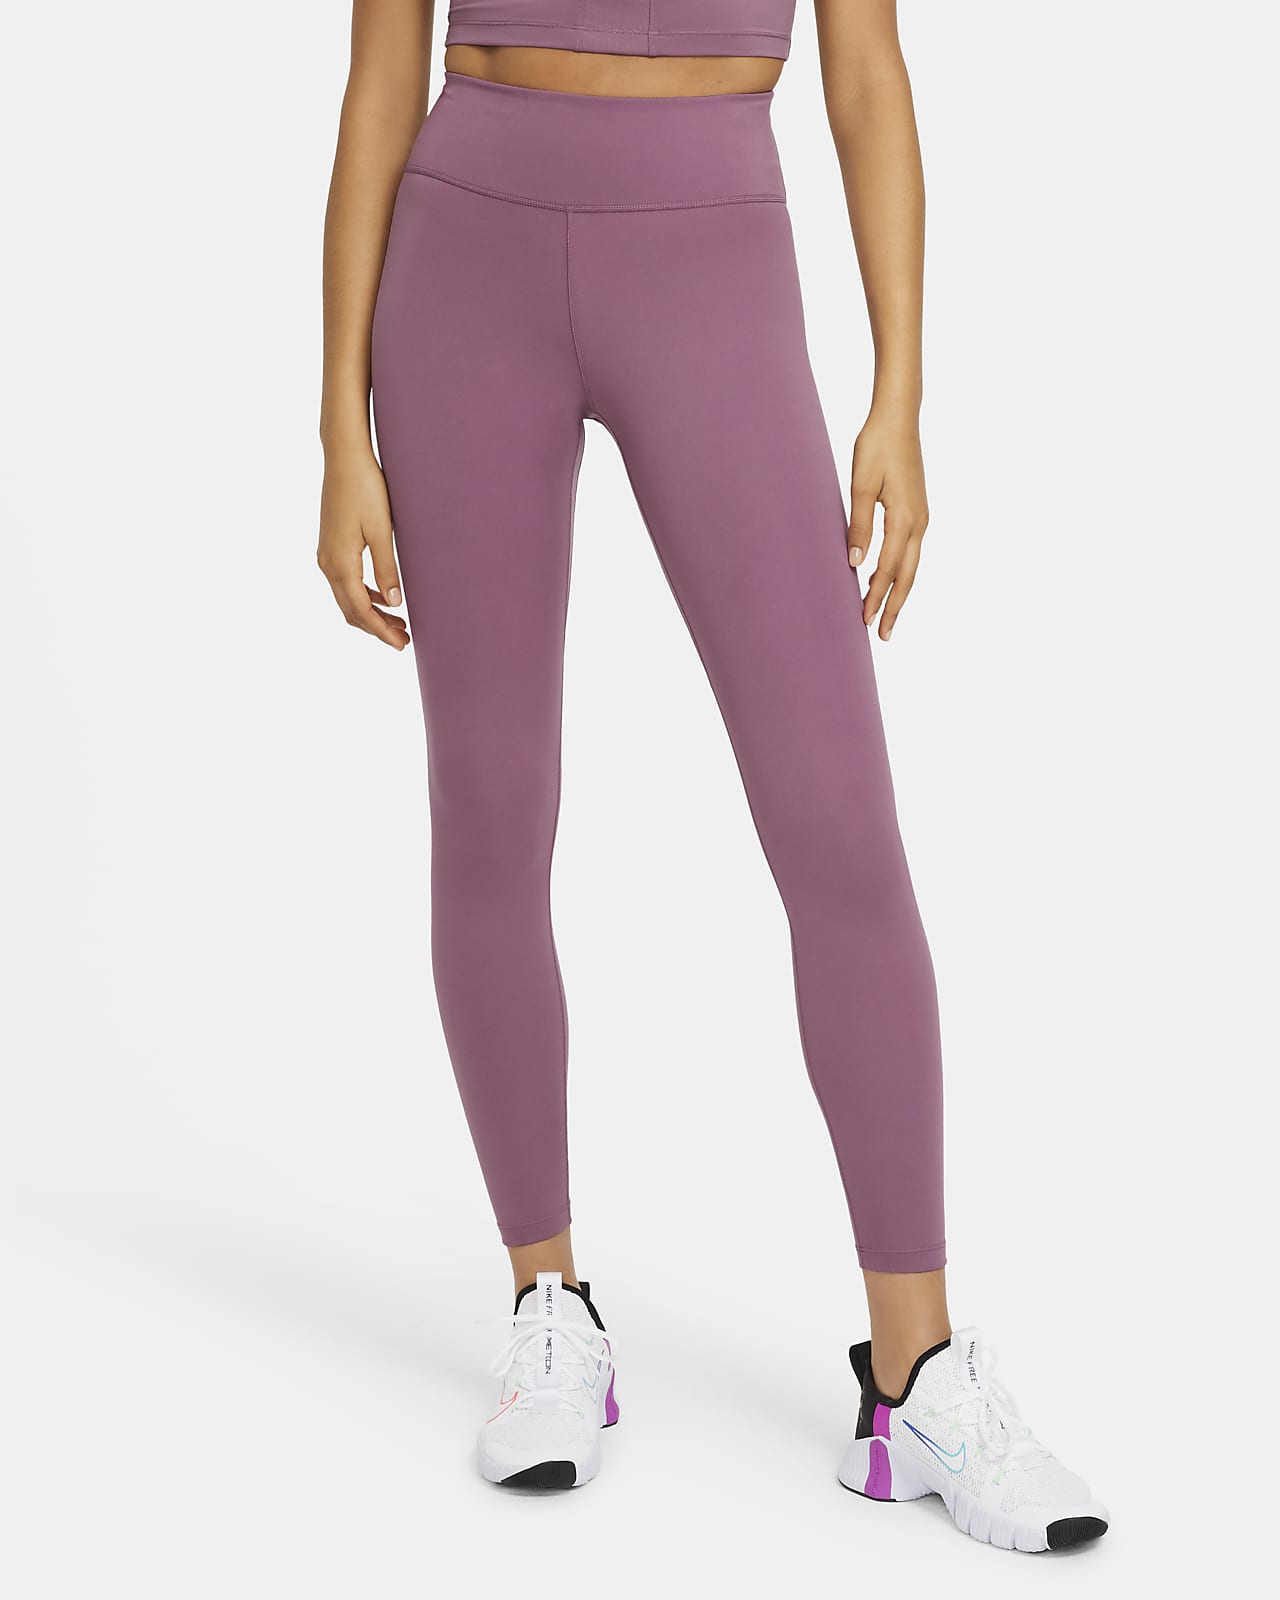 purple leggings nike